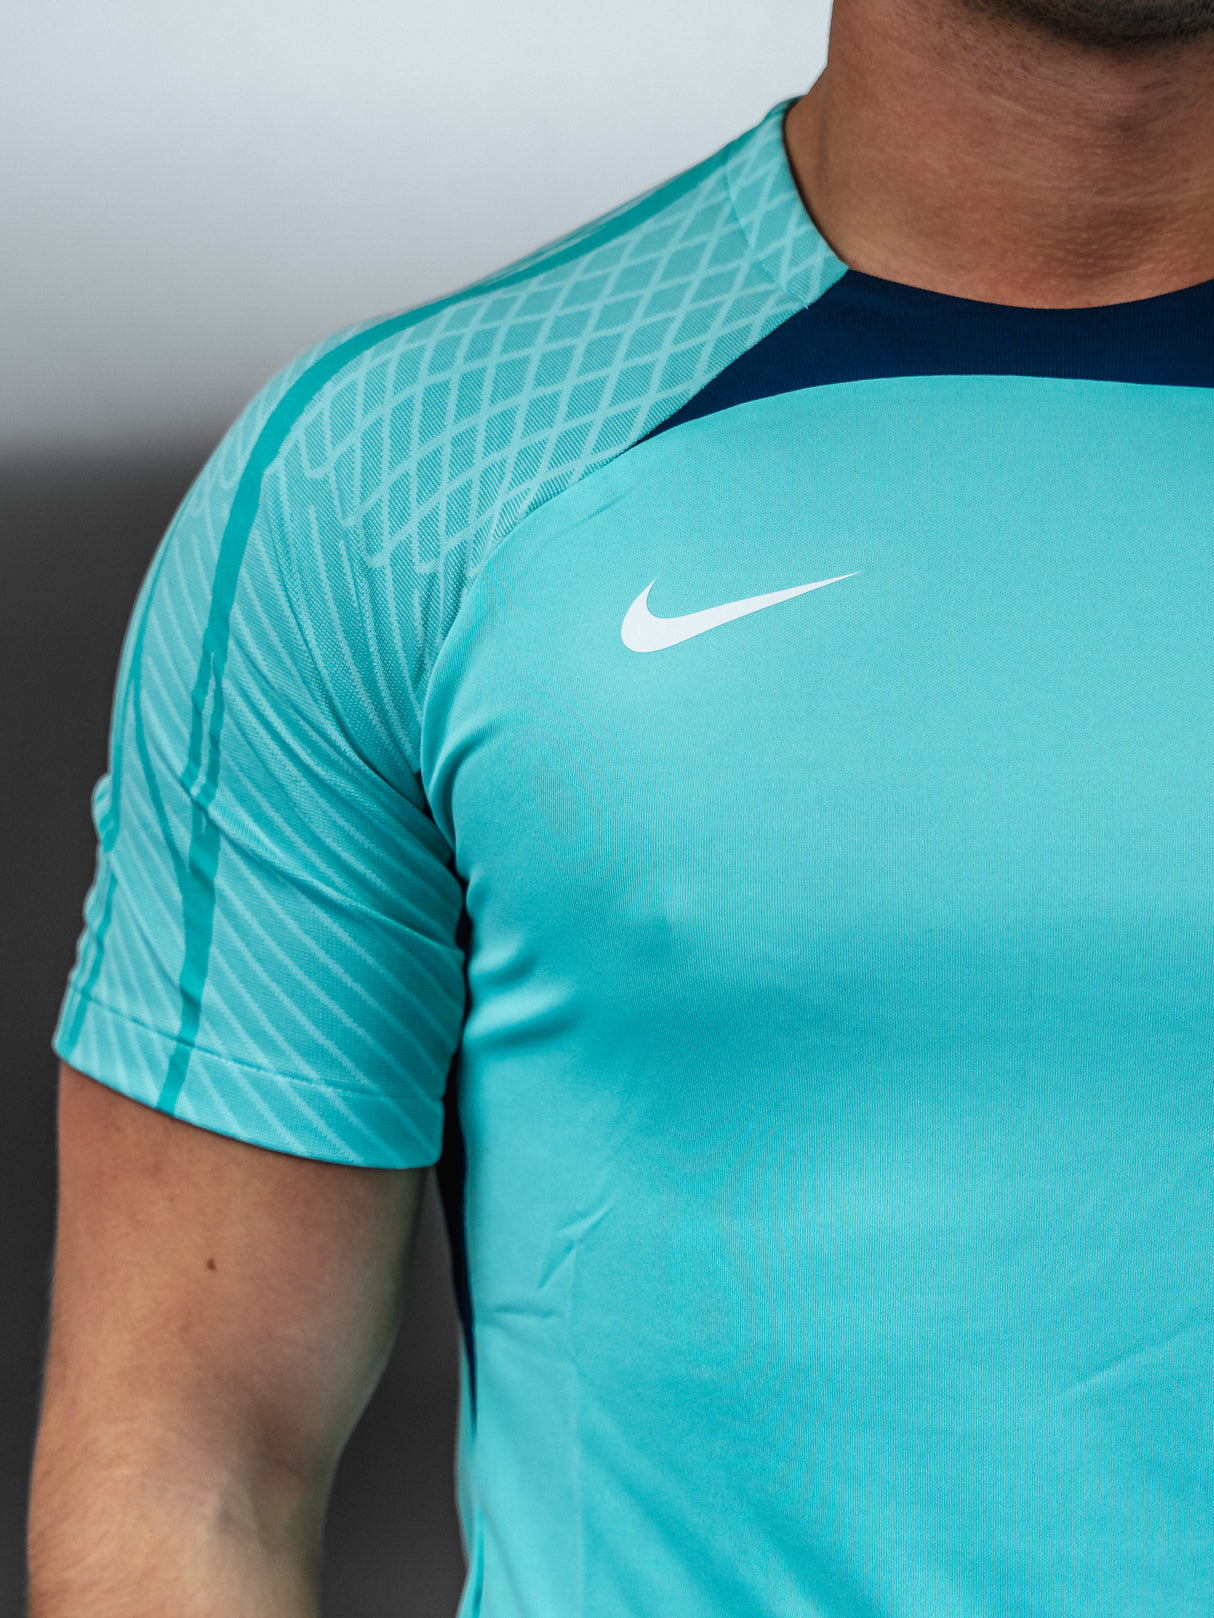 Nike - Strike Set - Hyper Turquoise/Navy